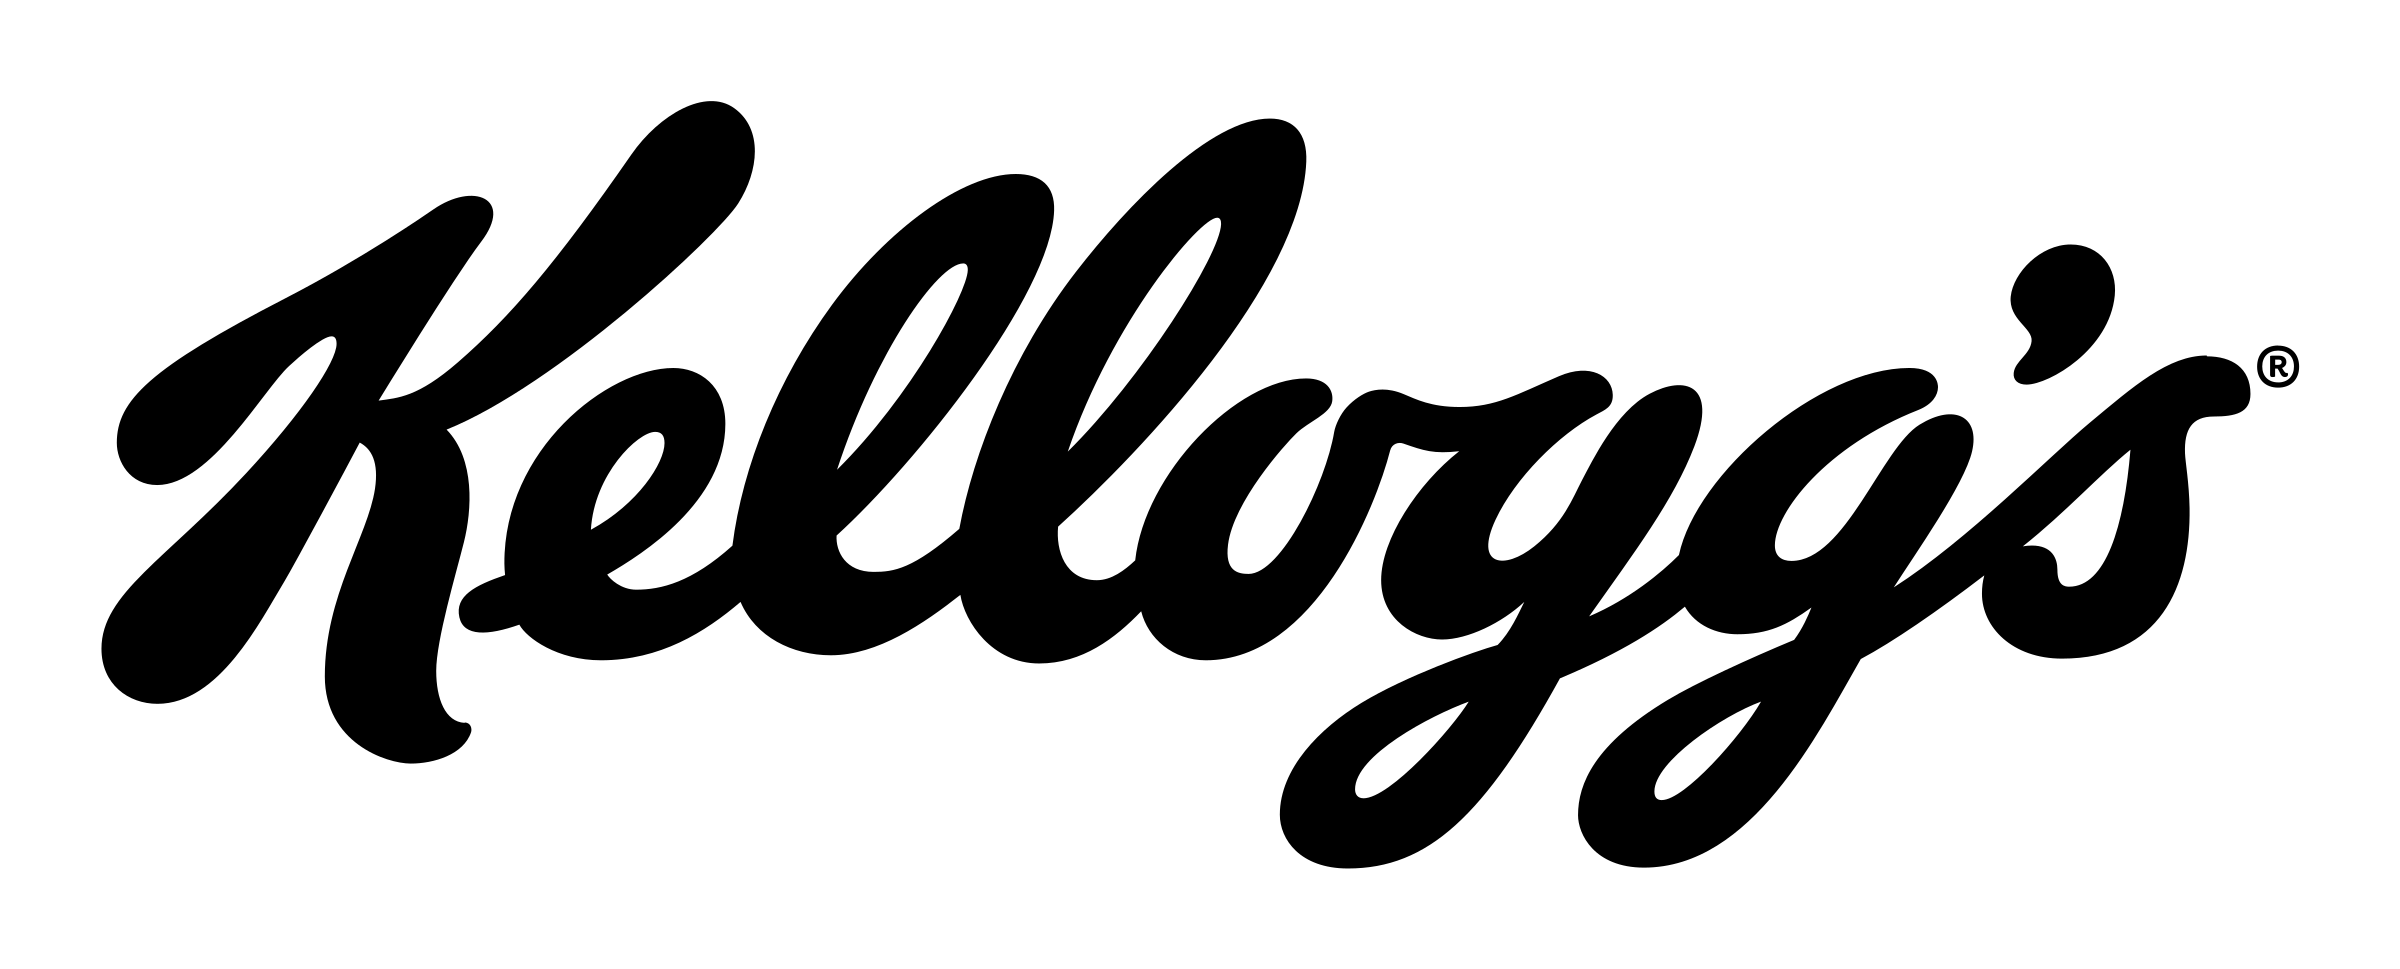 Kellogg's Logo - Kellogg's Logo PNG Transparent & SVG Vector - Freebie Supply